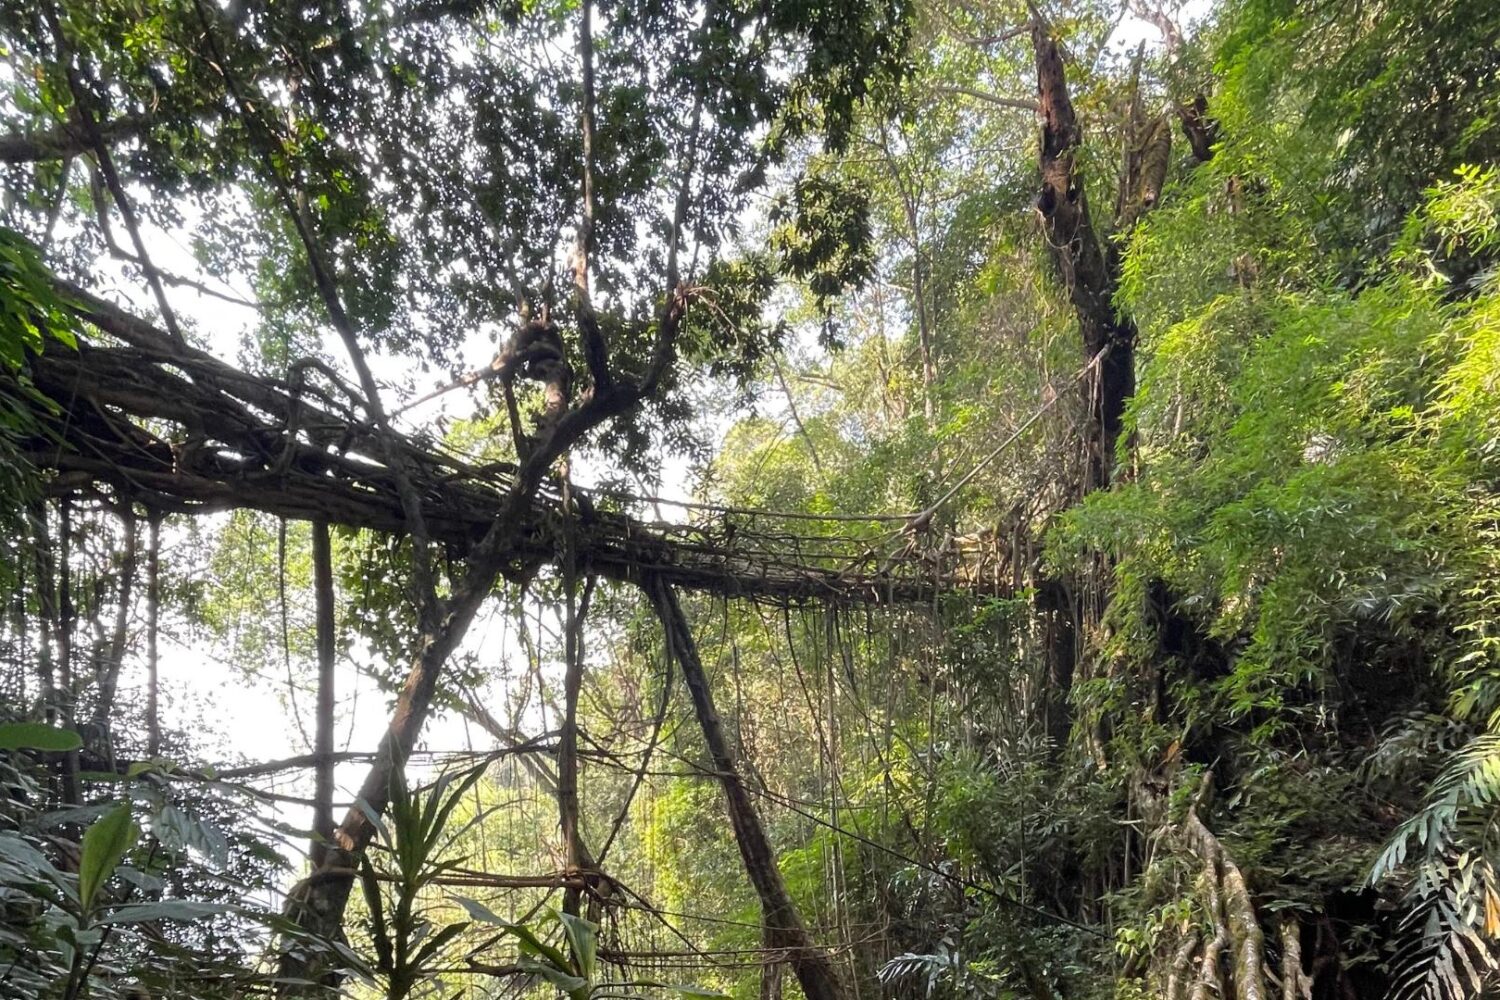 Mawkyrnot Living Root bridge